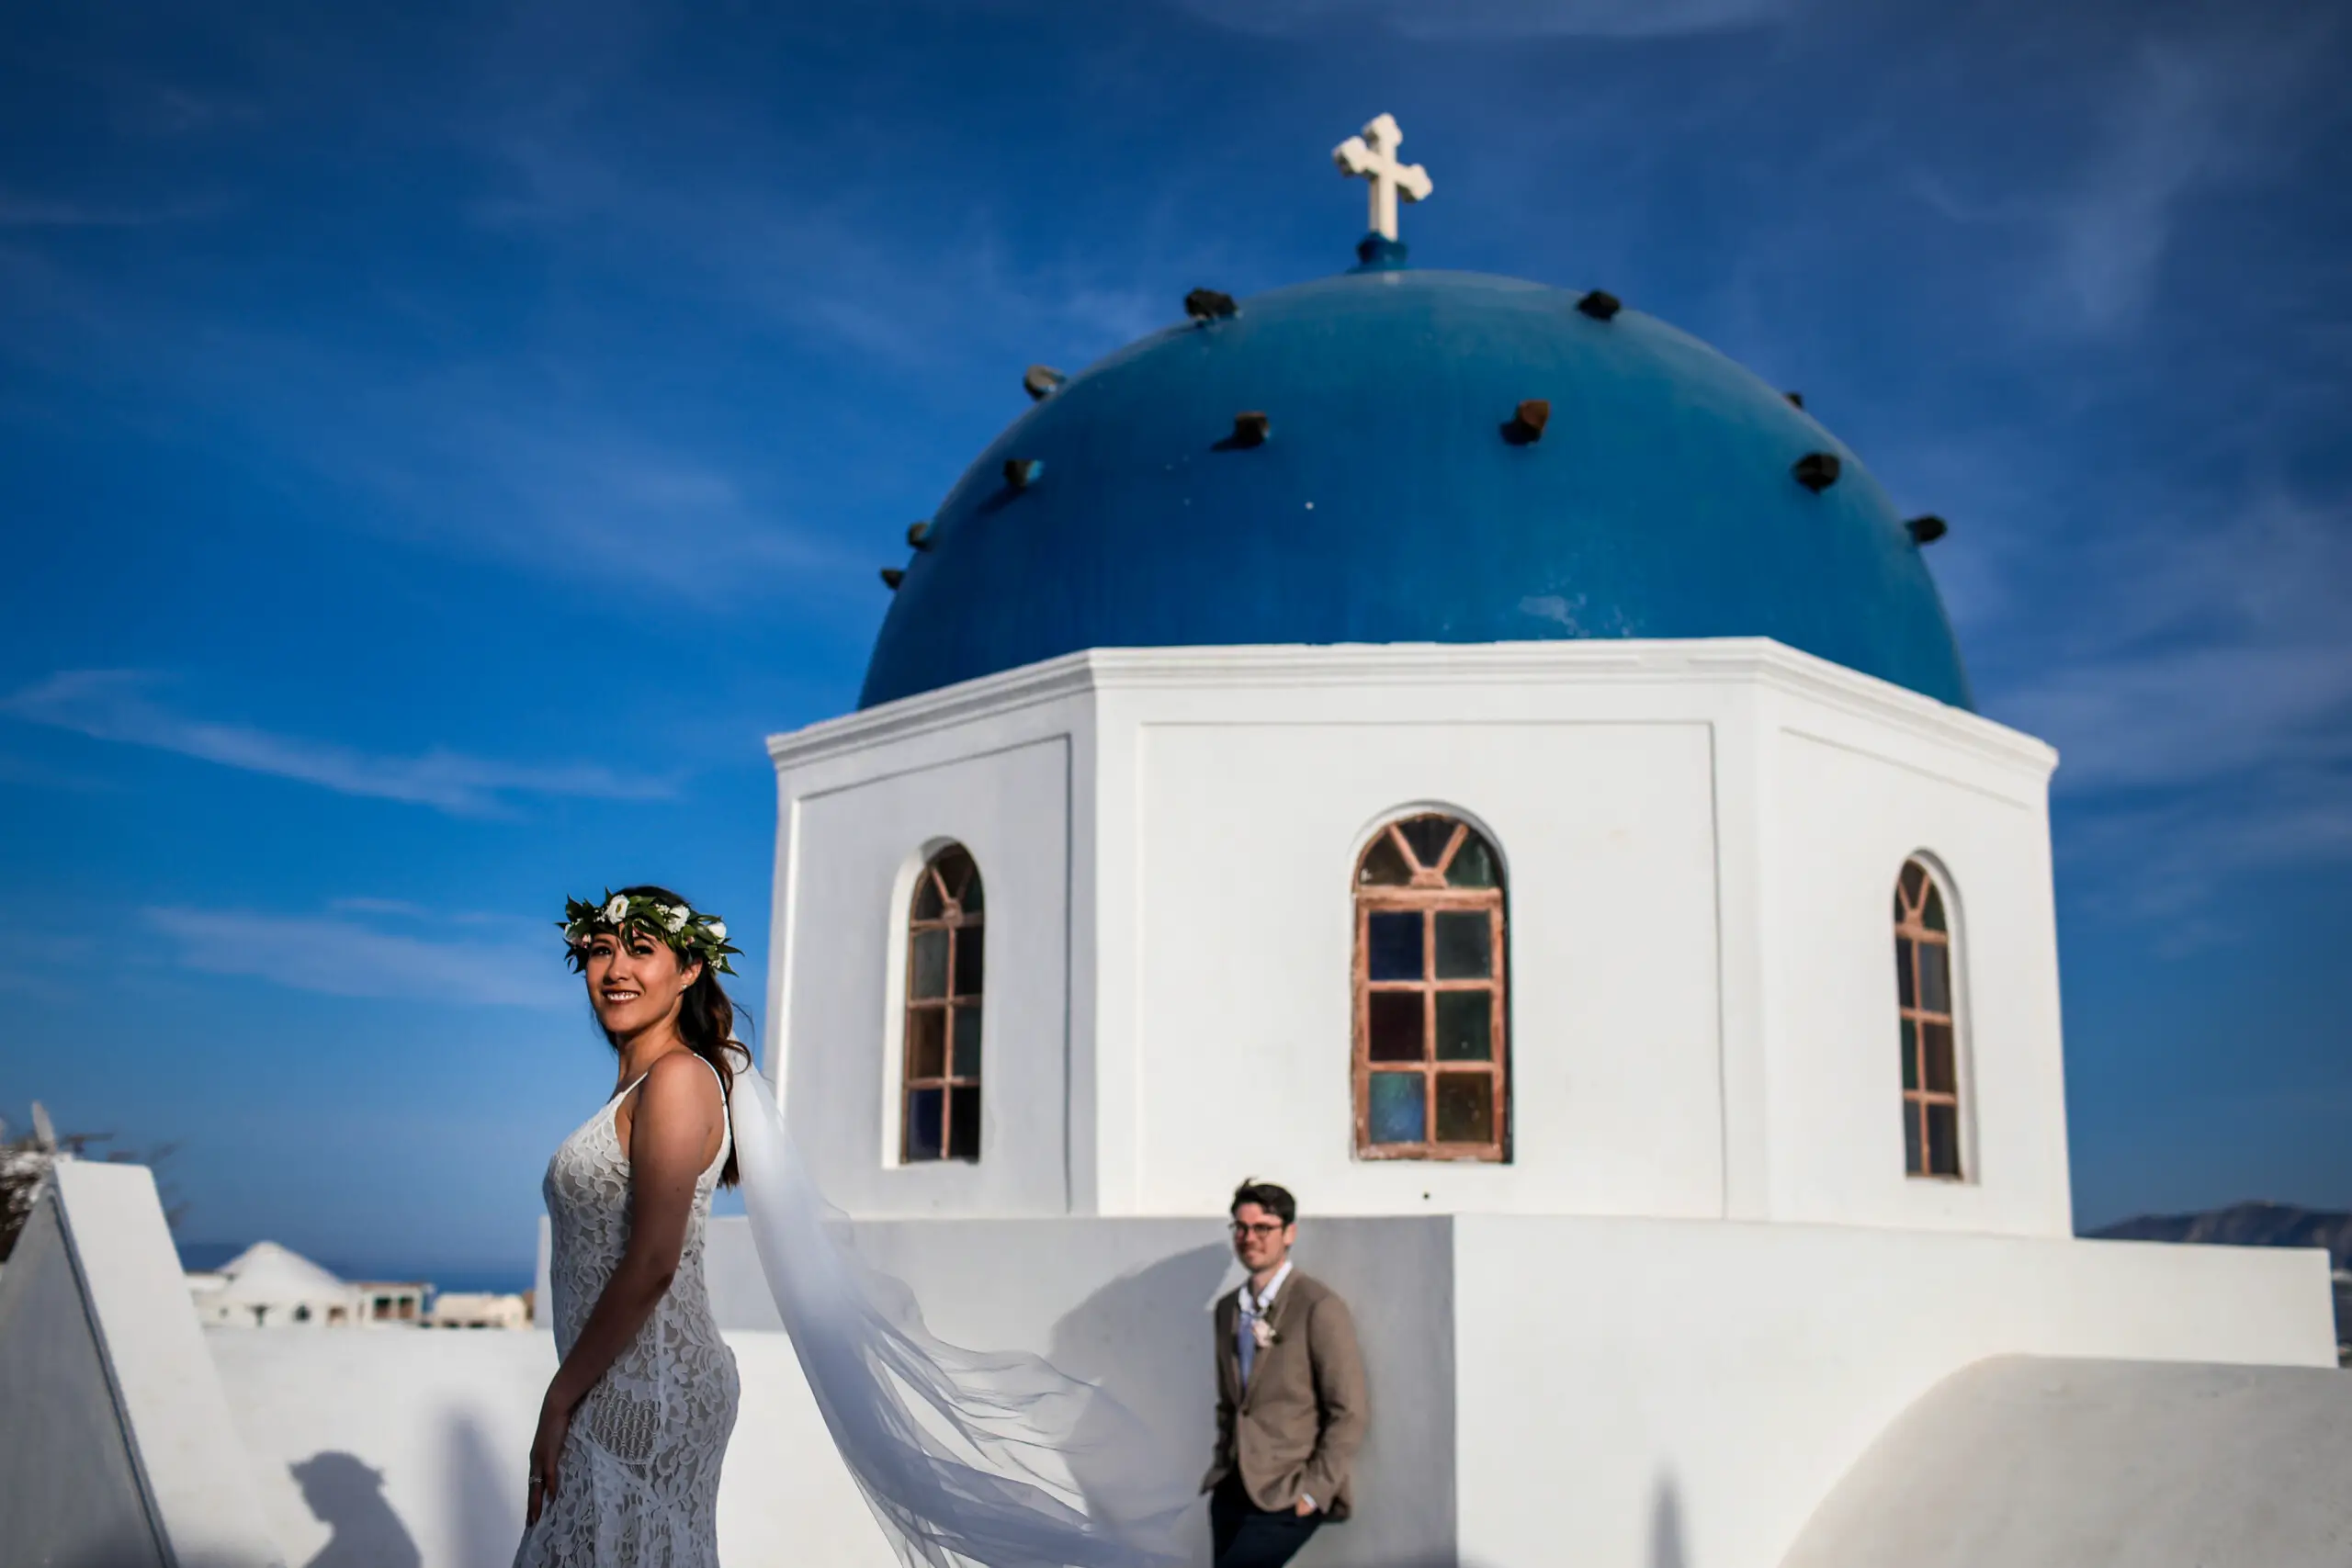 Wedding photoshoot by George, Localgrapher in Santorini